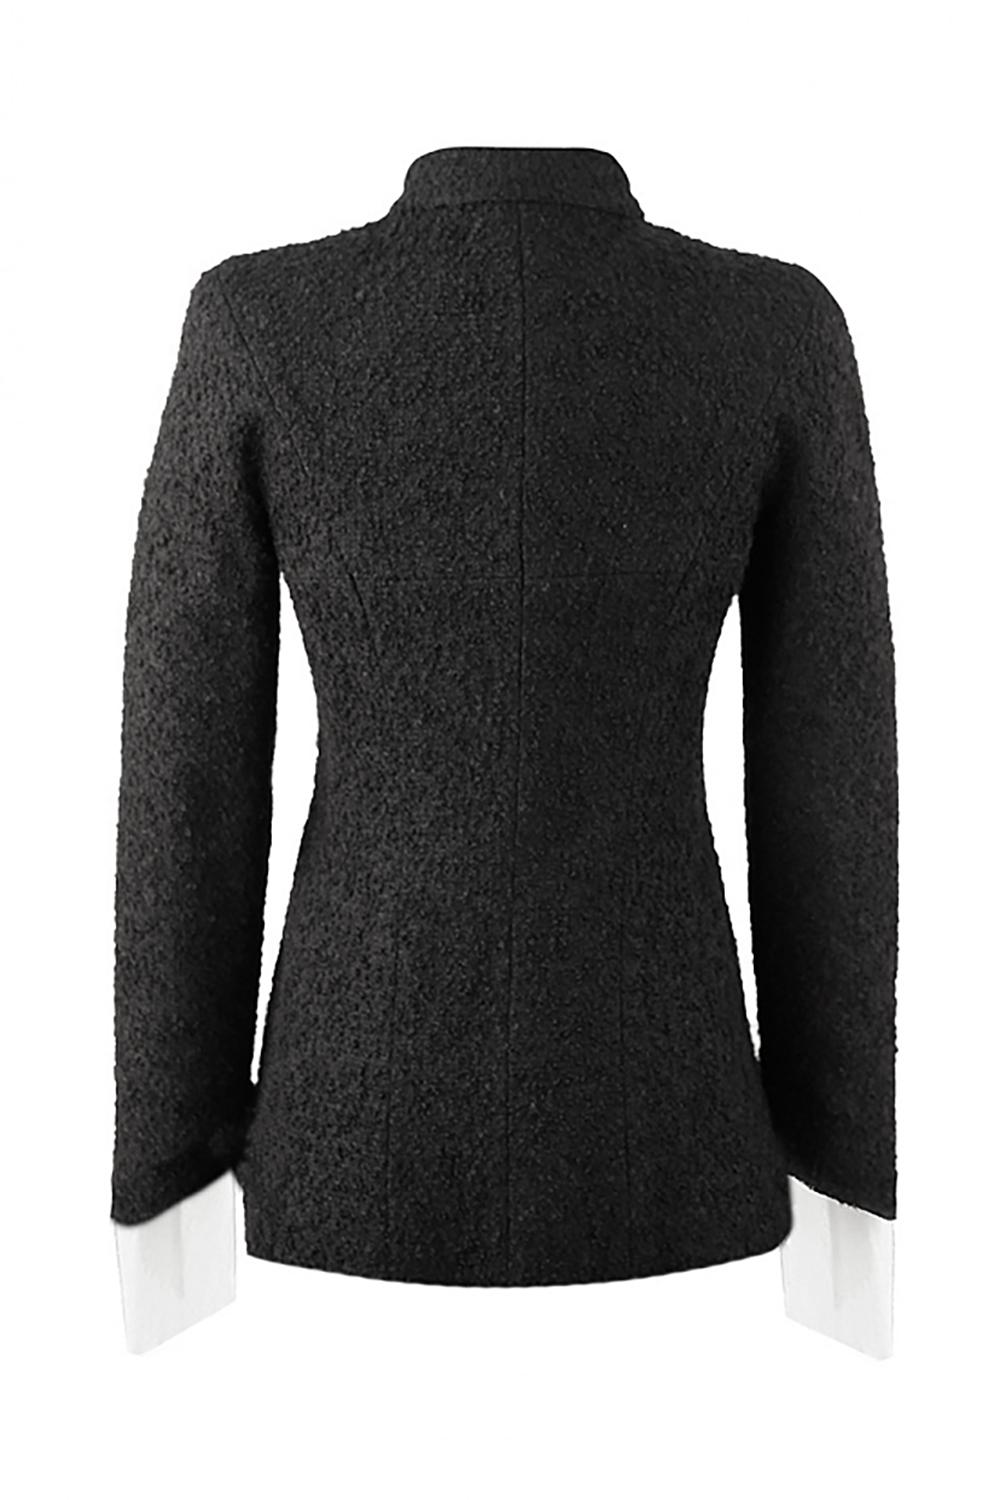 Chanel New Runway Little Black Tweed Jacket 2